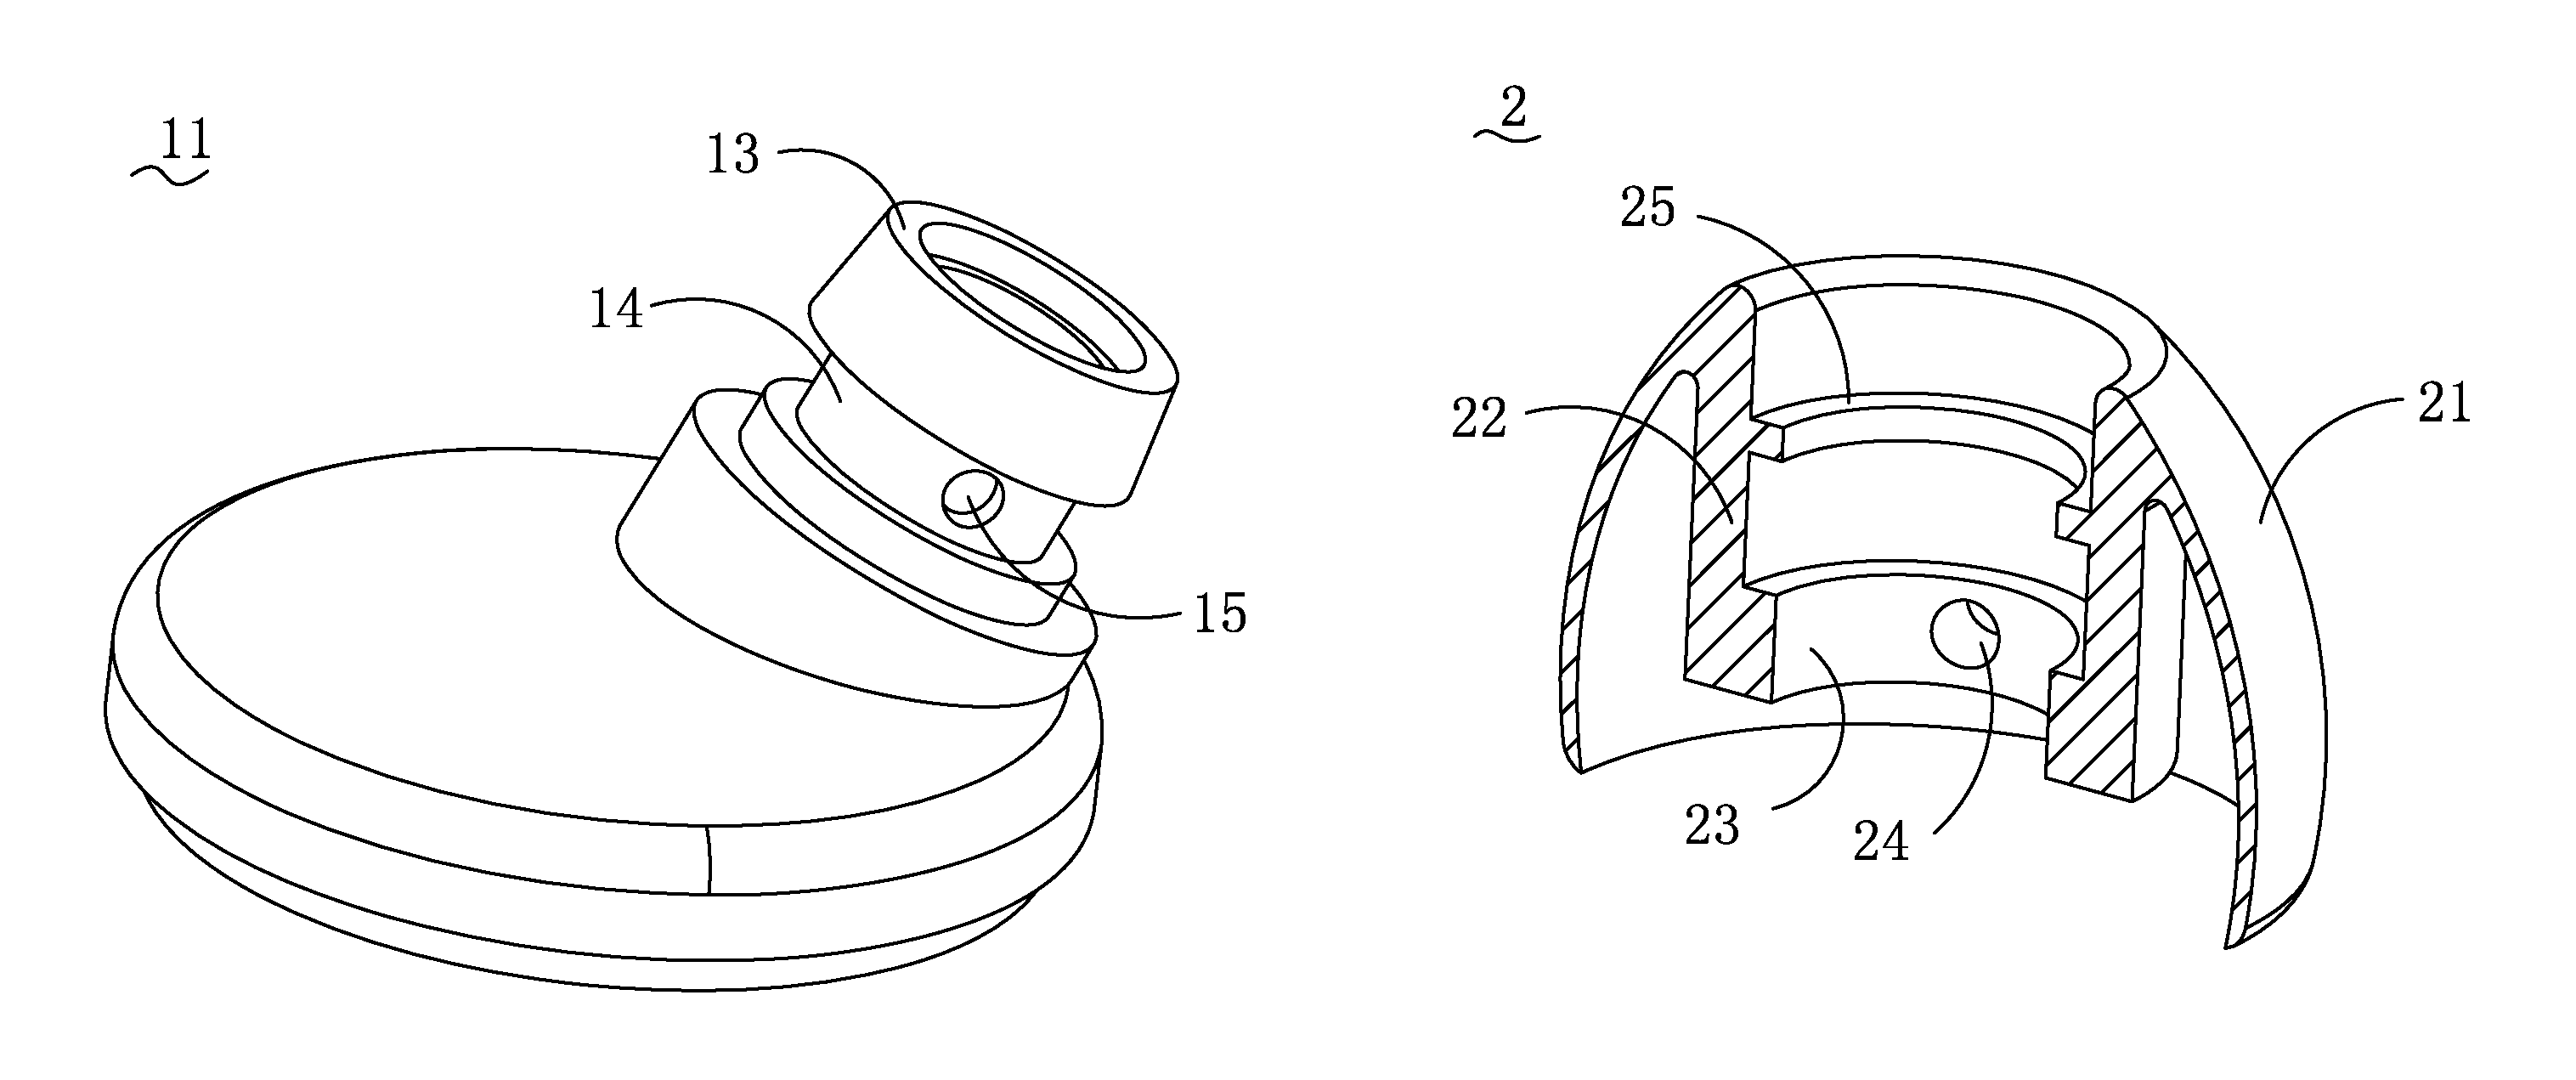 Earphone with rotatable earphone cap